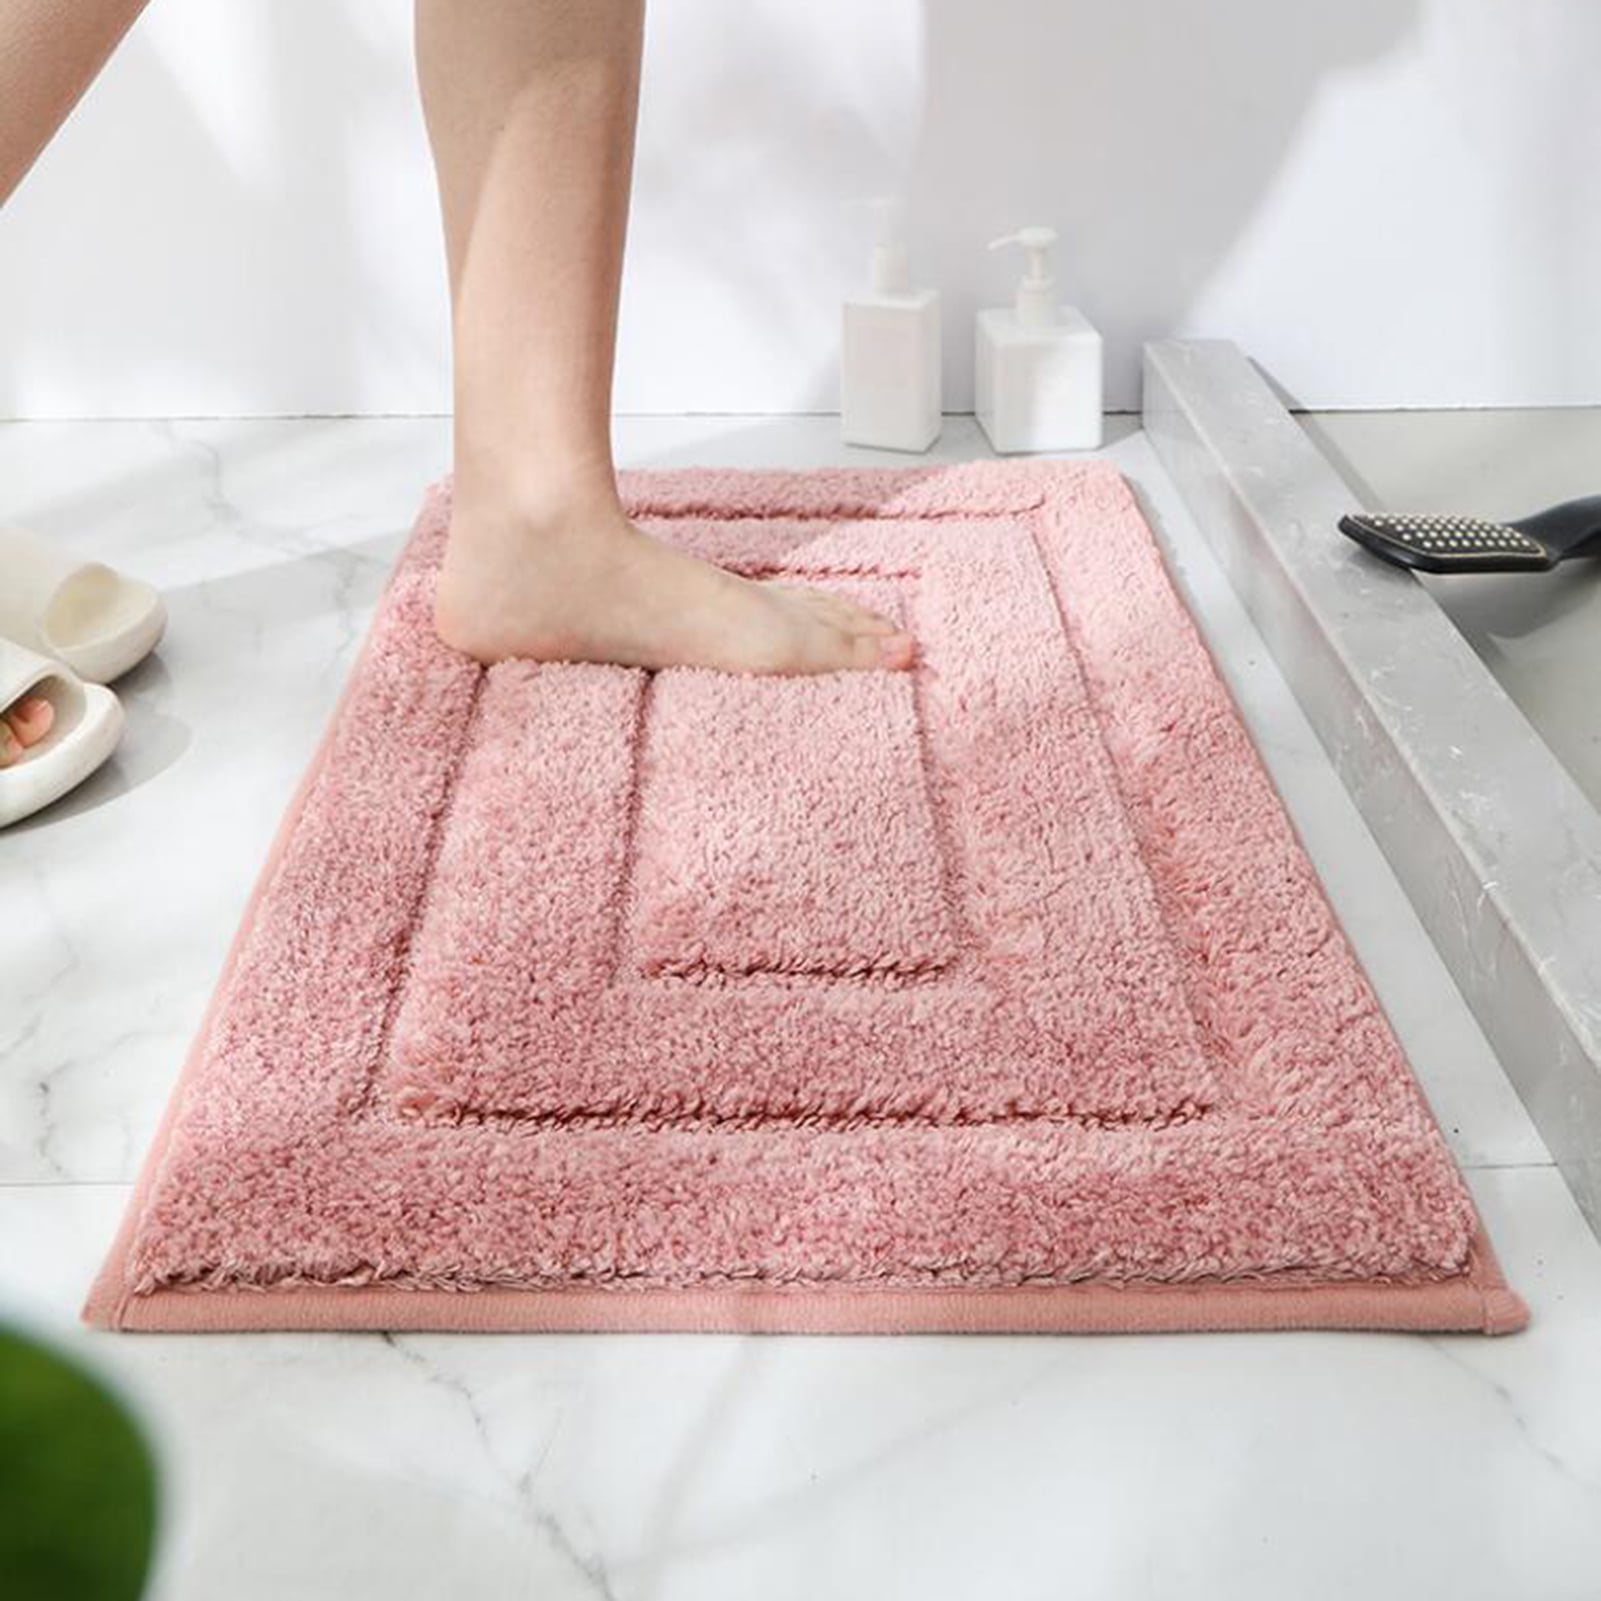 Bobasndm Bathroom Rugs Non Slip Small Bath Mat for Bathroom Coral Pink  Bathroom Decor Fluffy Plush Bath Rug Machine Washable Shower Rug Water  Absorbent Carpet (24” x16”) 